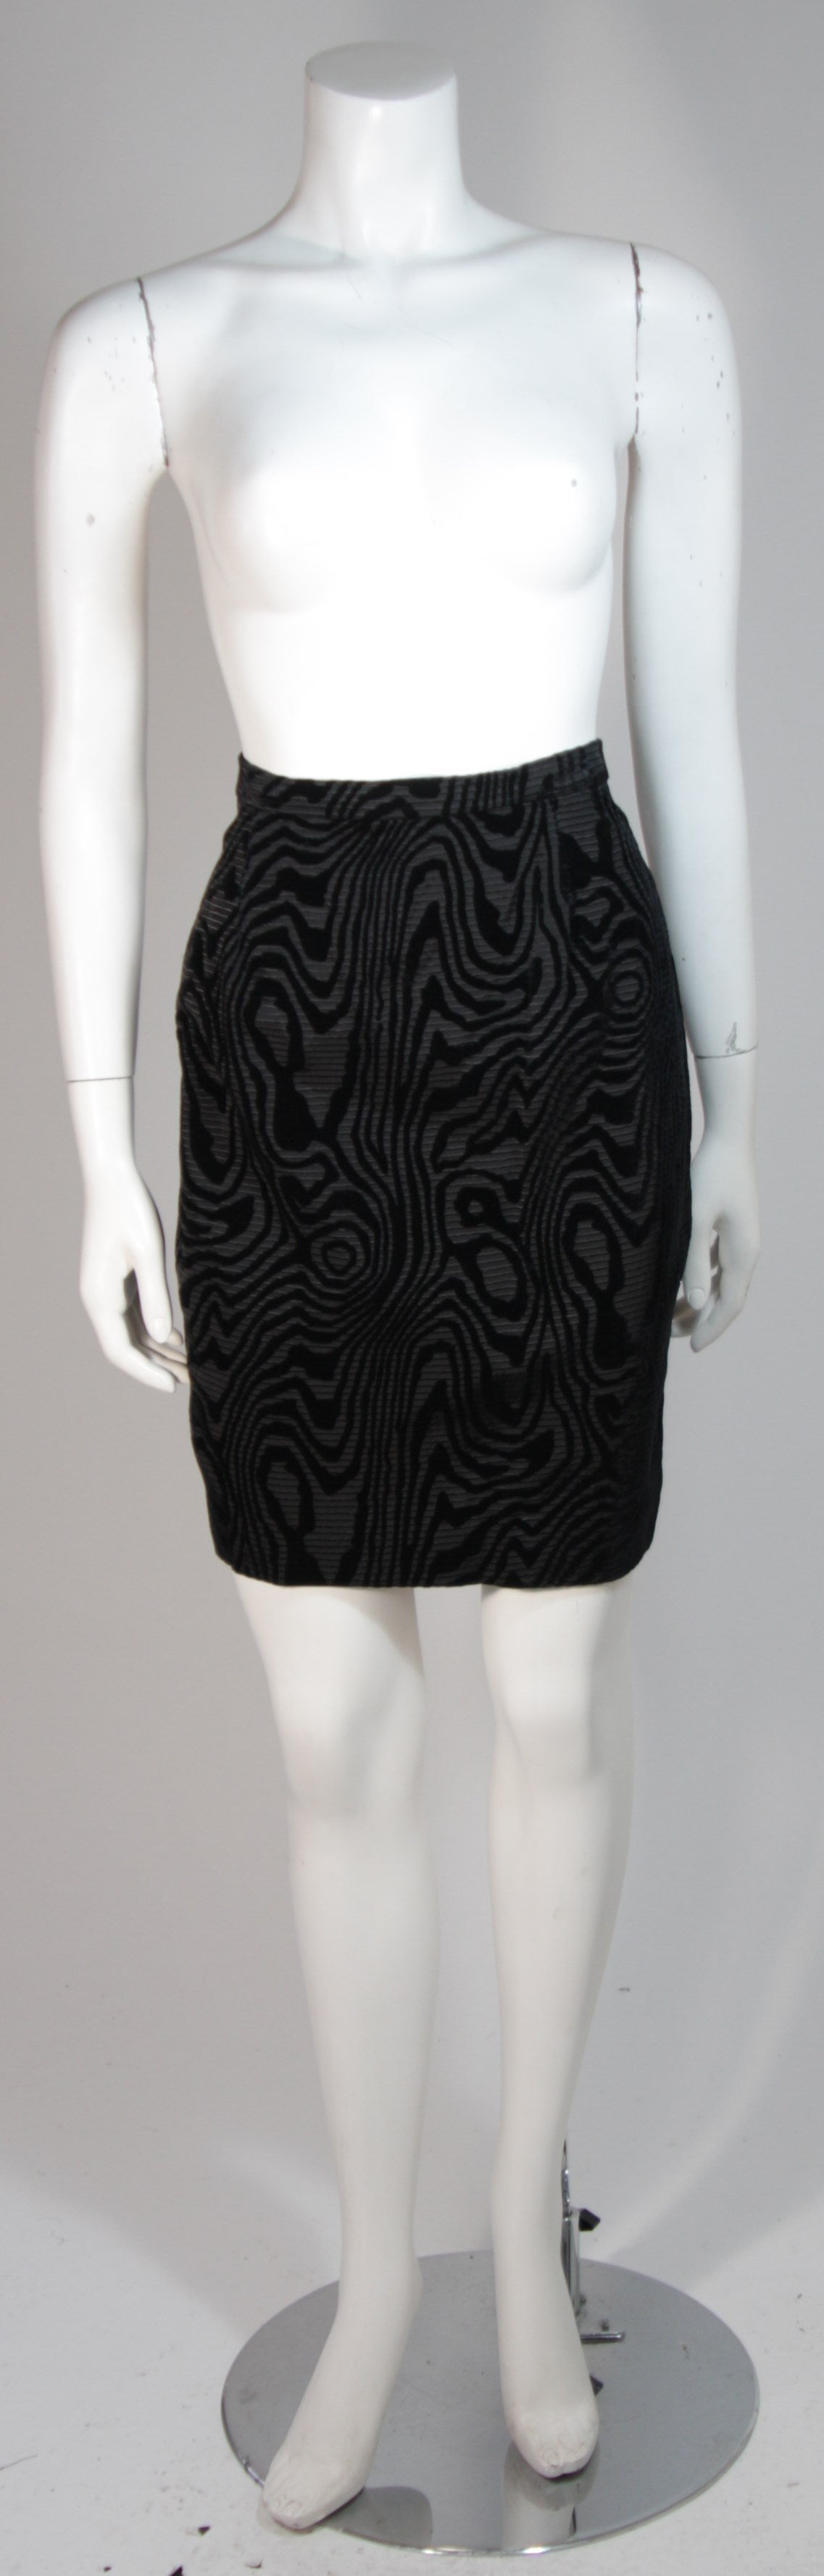 Vicky Tiel Black Silk Skirt Suit with Patterned Velvet Accents Size 38 5